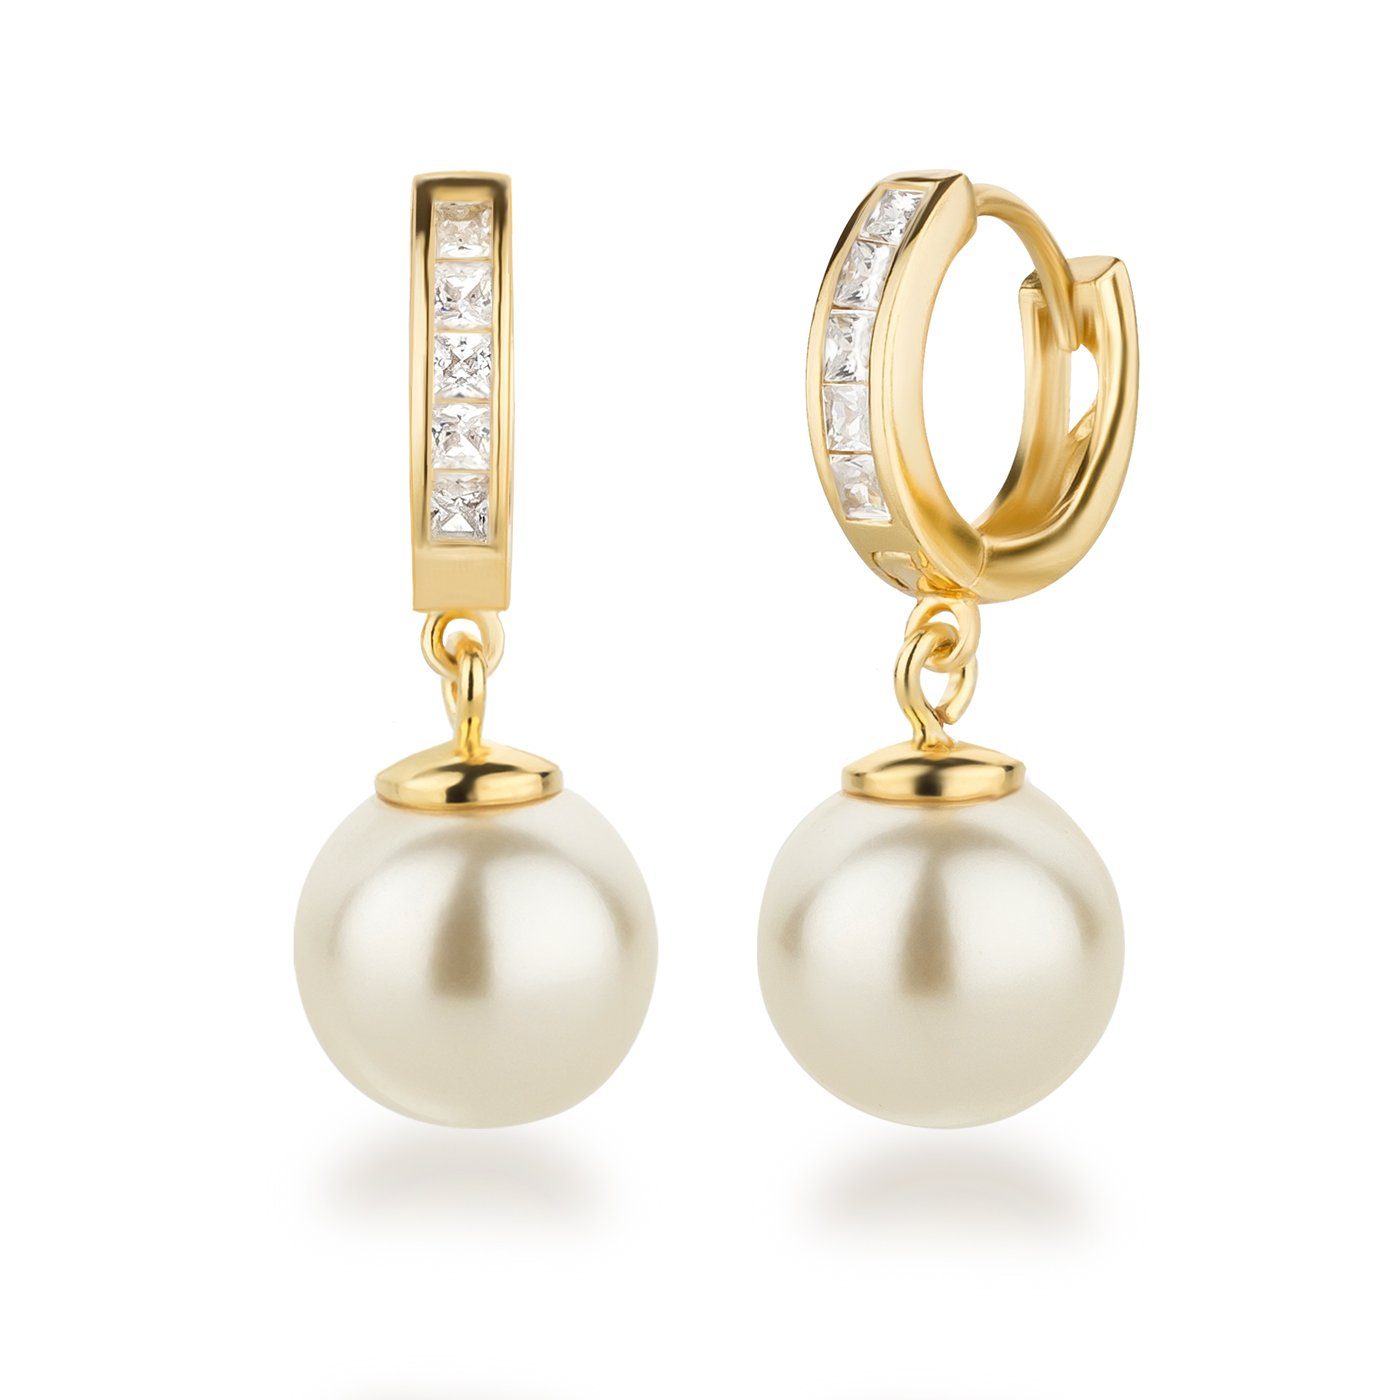 Schöner-SD Perlenohrringe Vergoldete Creolen Ohrhänger mit Perlen 10mm  hängend, 925 Silber, goldplattiert, Damenohrringe, Hänger